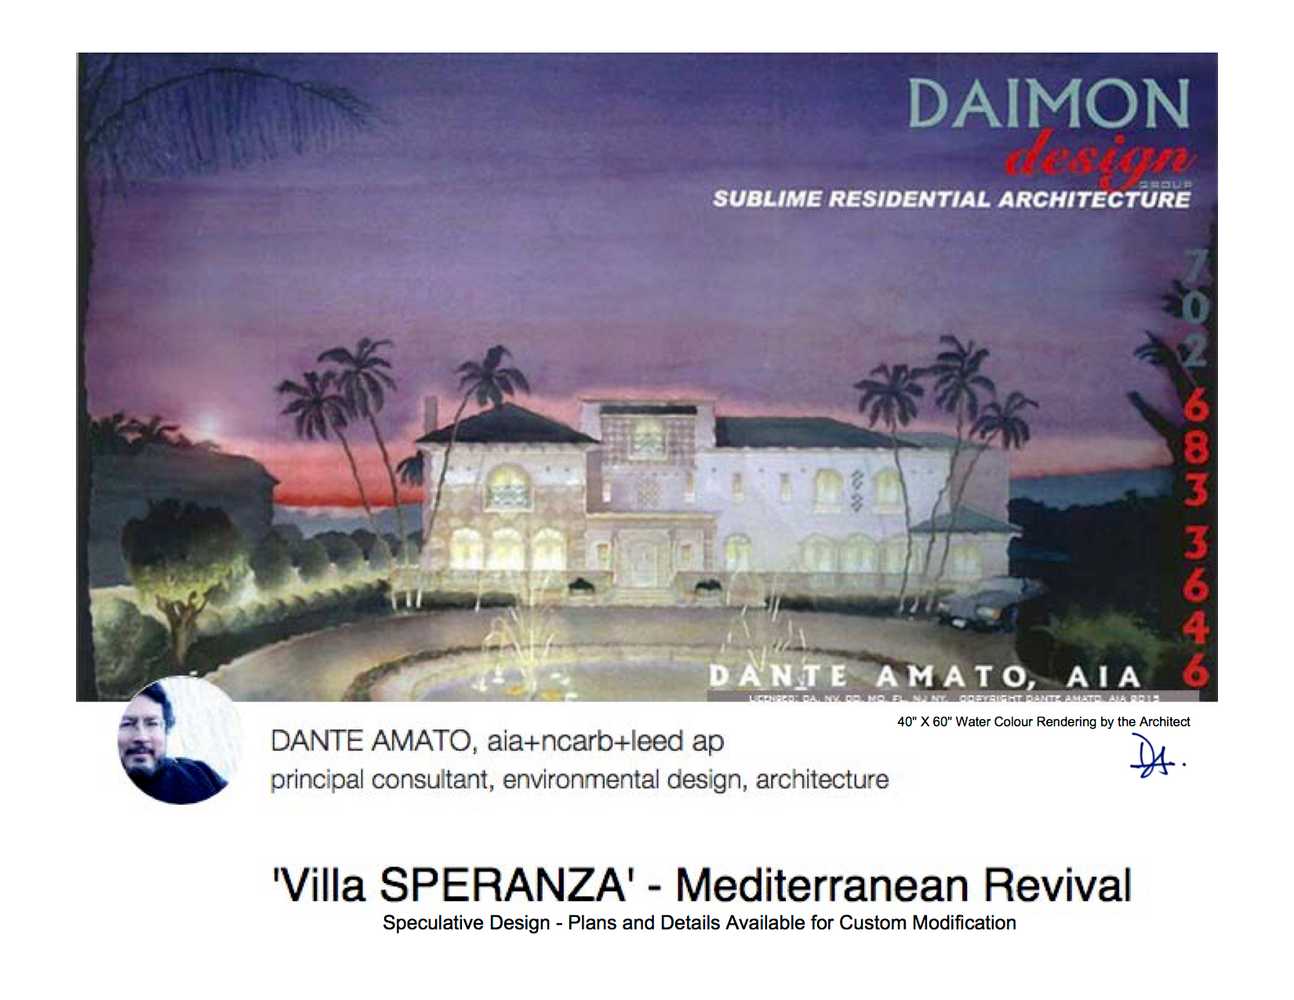 Dante Amato, AIA - Architect 'Mature' Period Spec Design